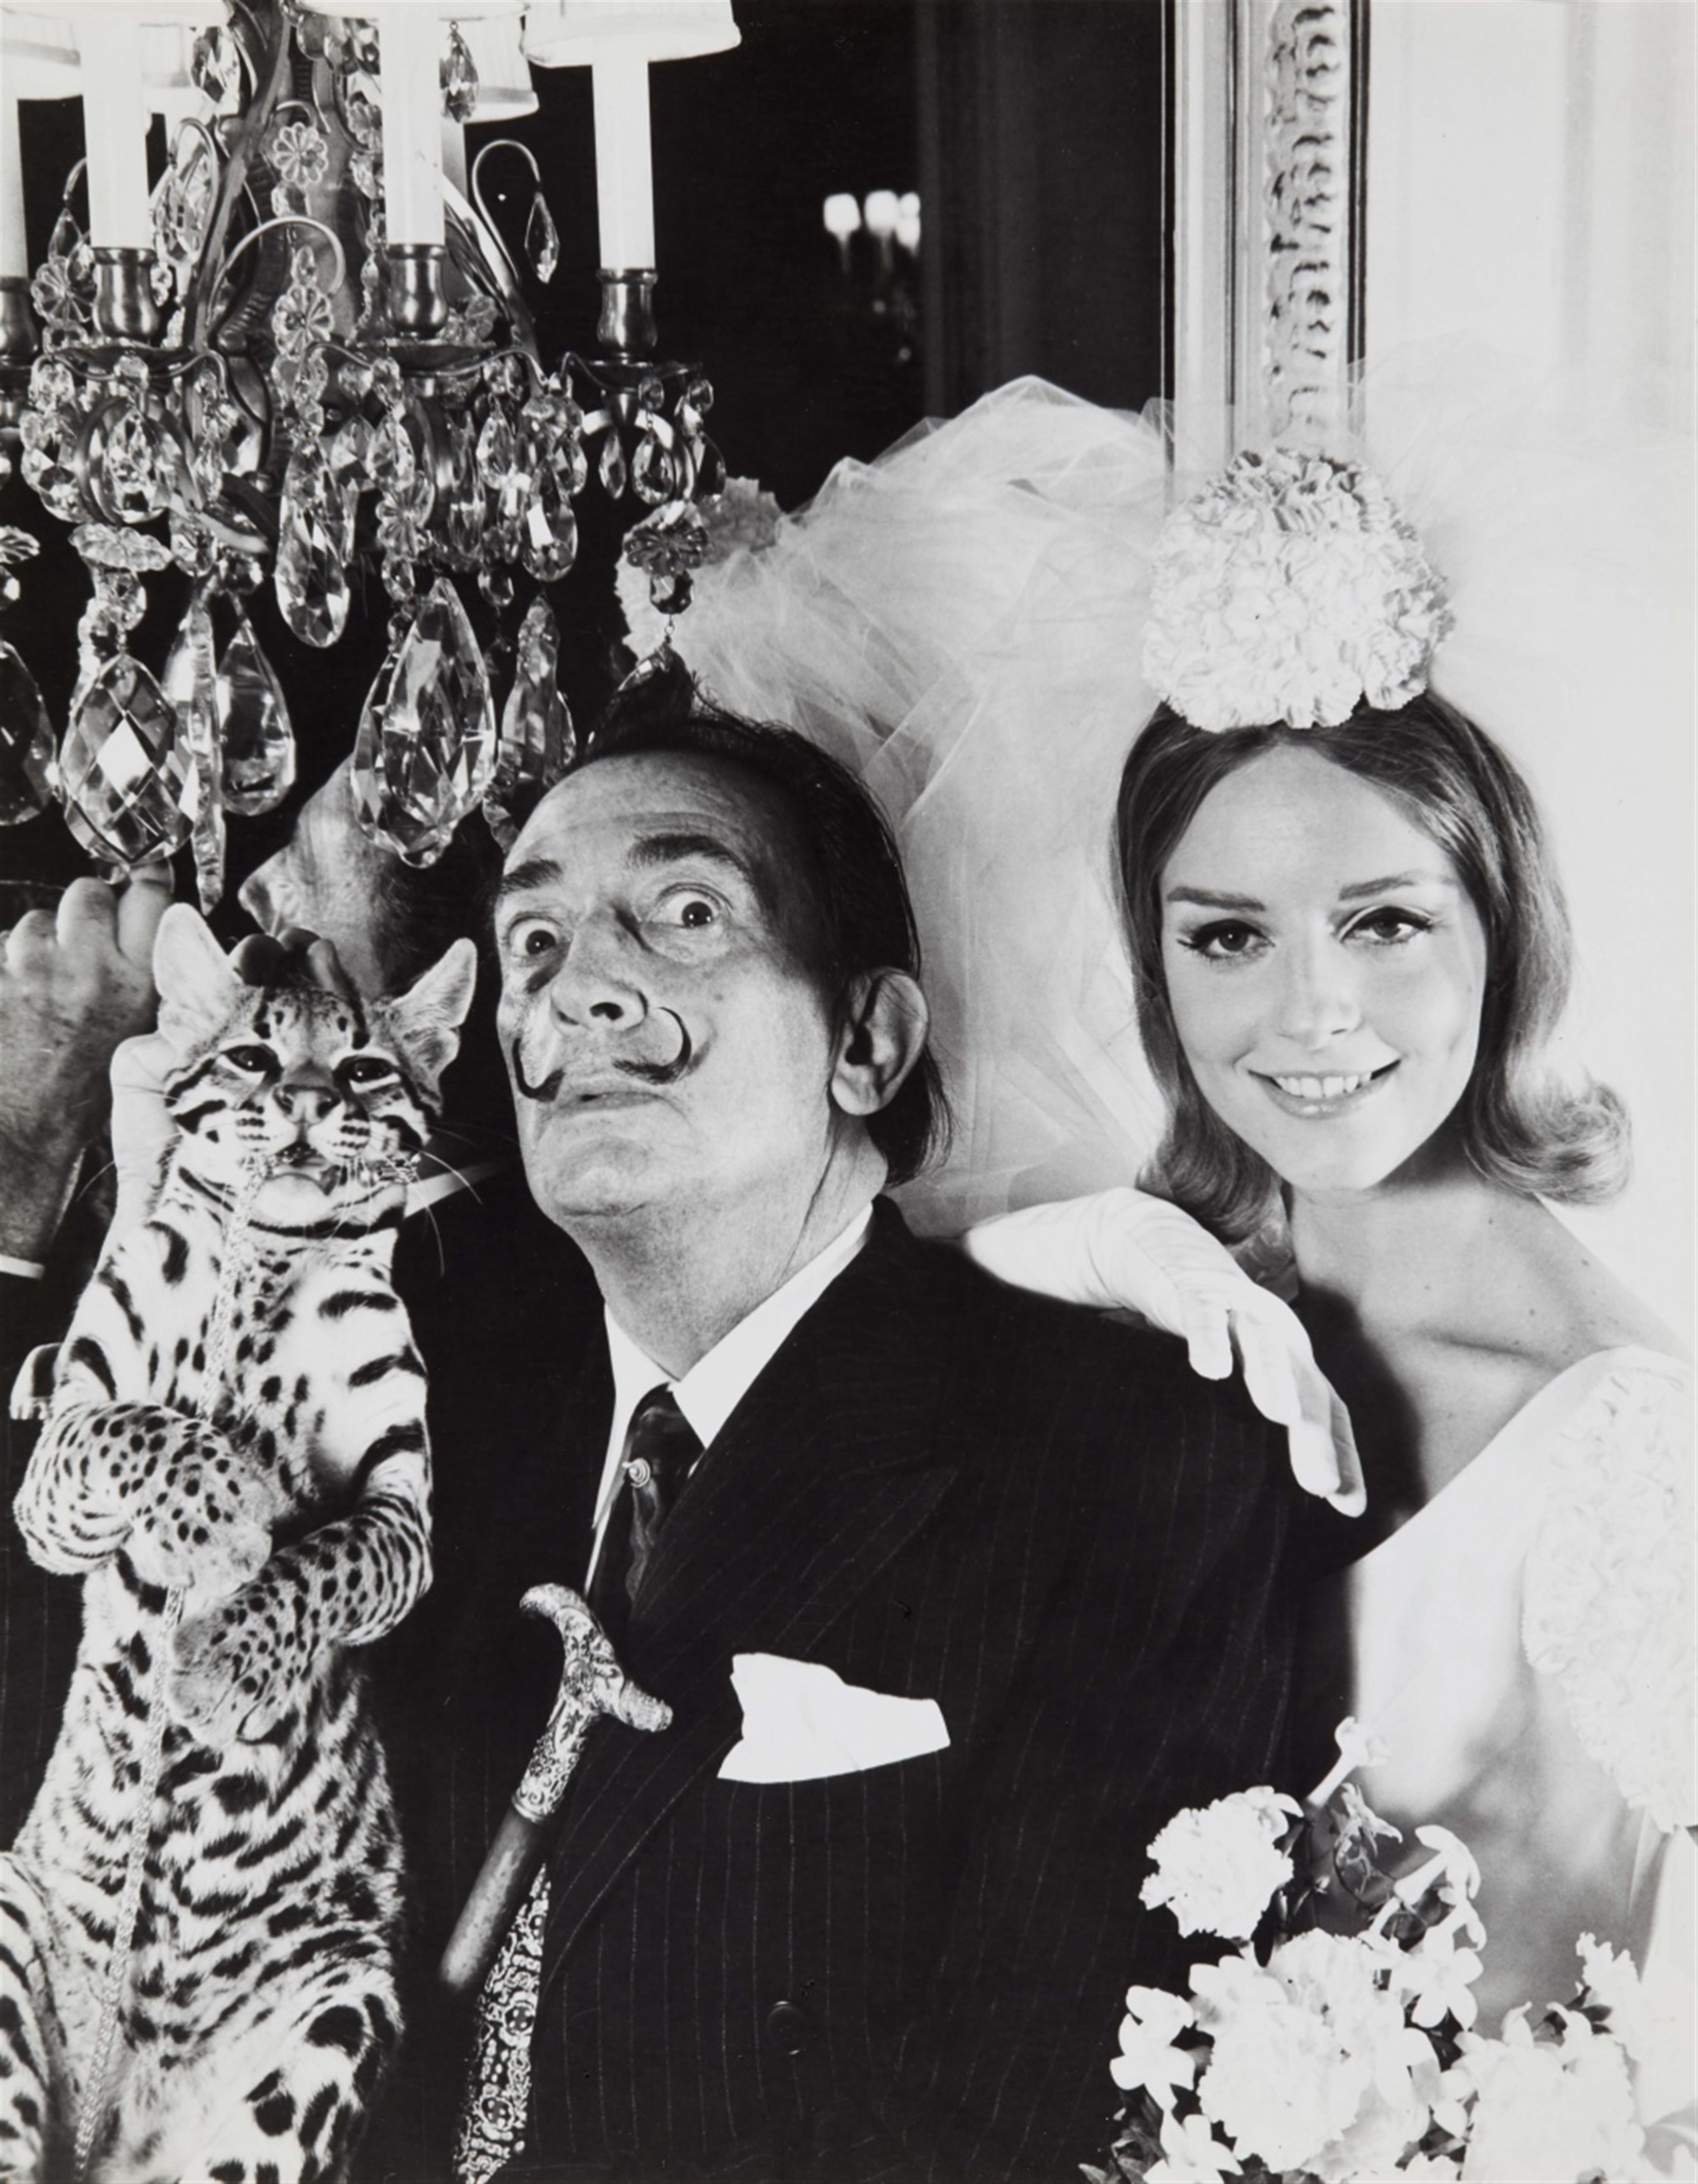 Edward Pfizenmaier - Dali with bride and ocelot, St. Regis Hotel, New York - image-1